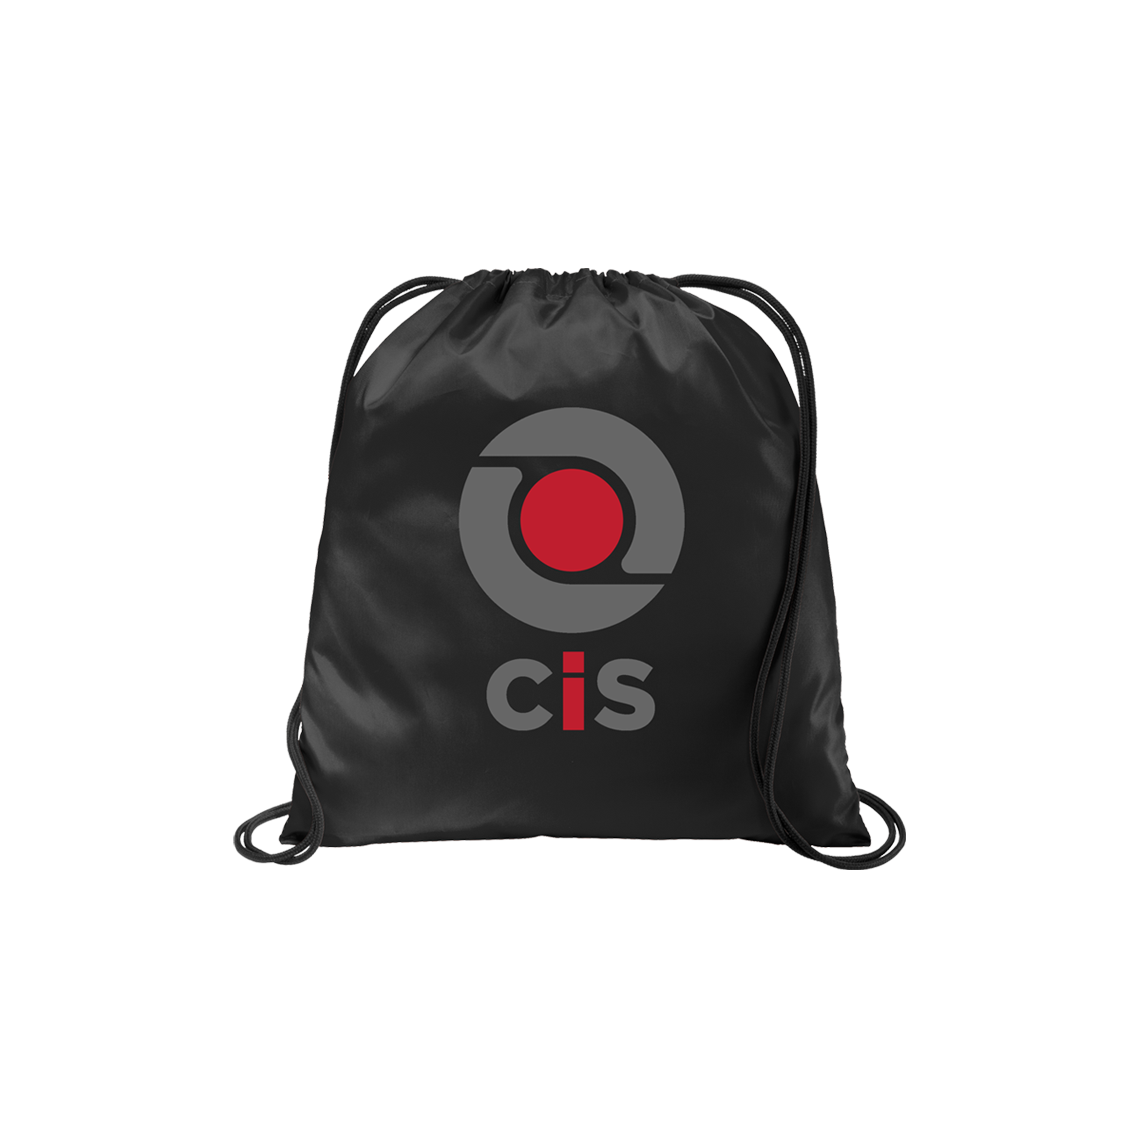 CIS Drawstring Backpack